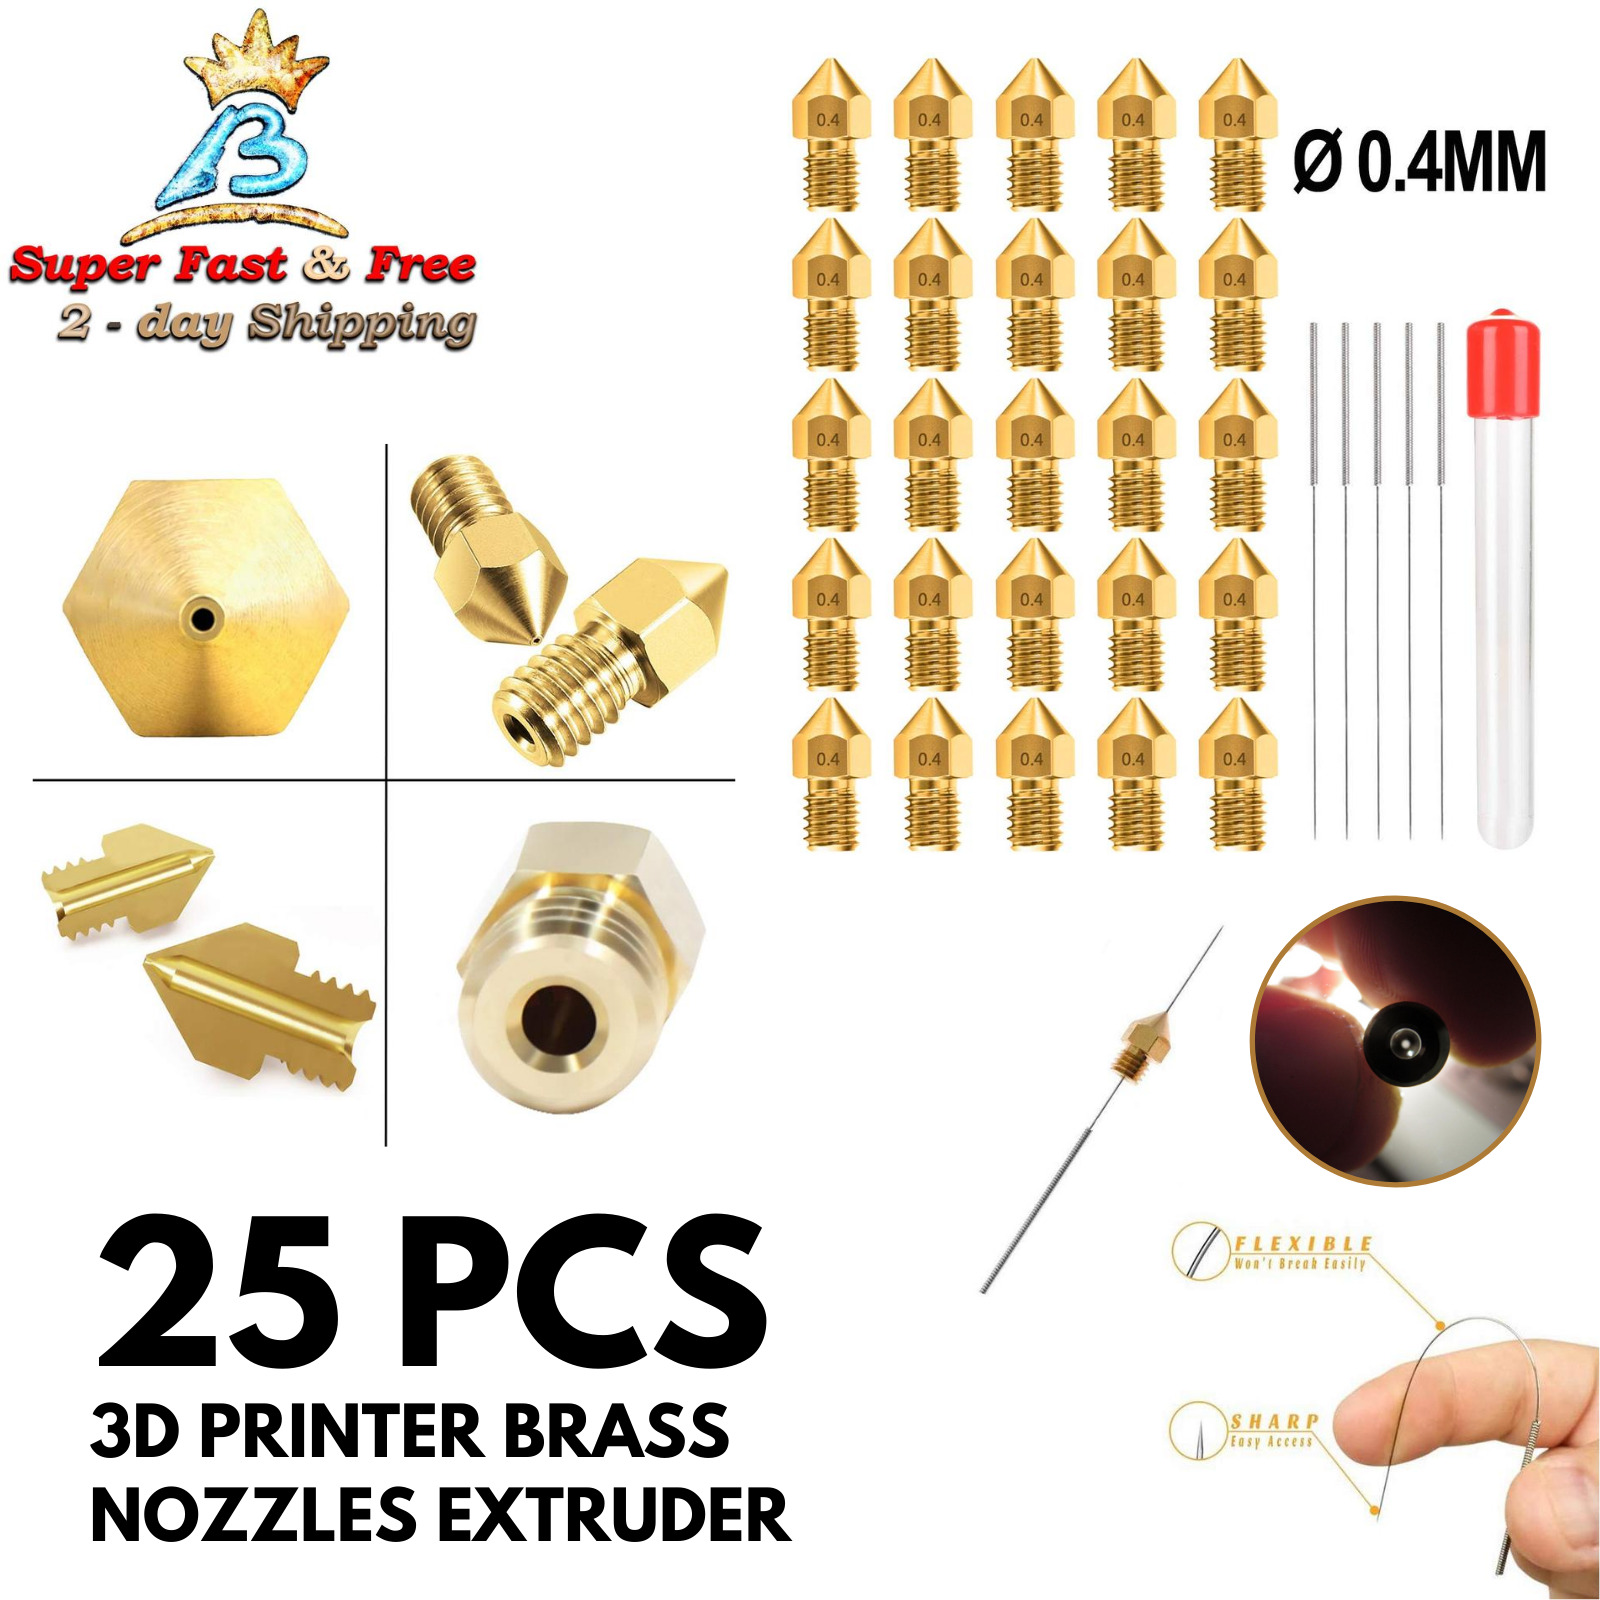 0.4MM MK8 Ender 3 Nozzles 3D Printer Brass Nozzles Extruder For Makerbot 25 Pcs 